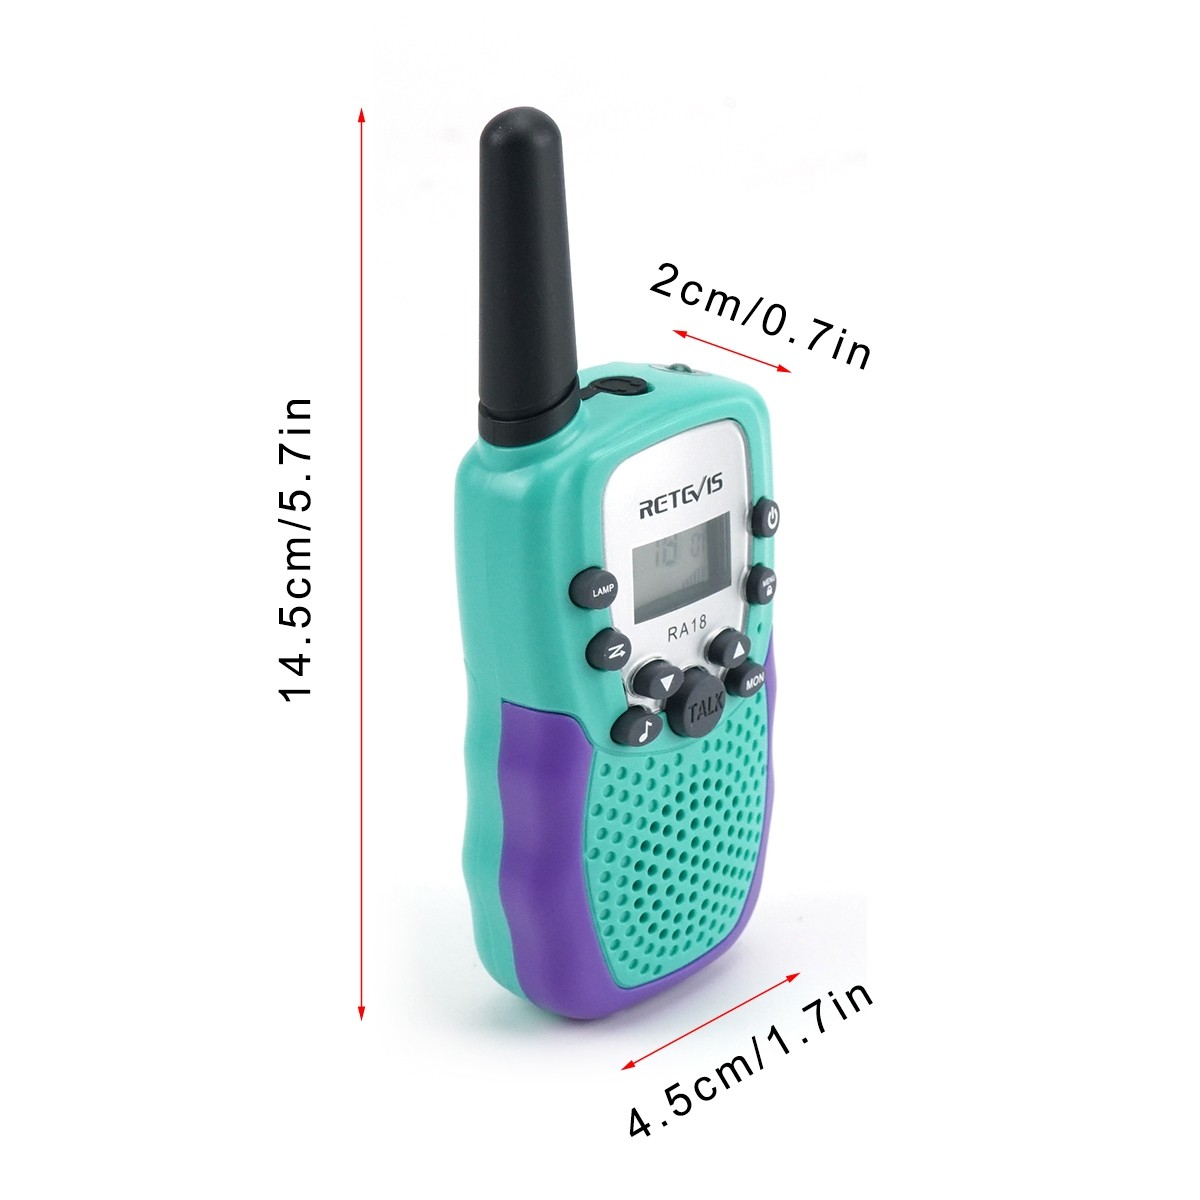 1 Pair RETEVIS RA18 0.5W US Frequency 22CHS FRS License-free Two Way Radio Children Handheld Walkie Talkie (Green)